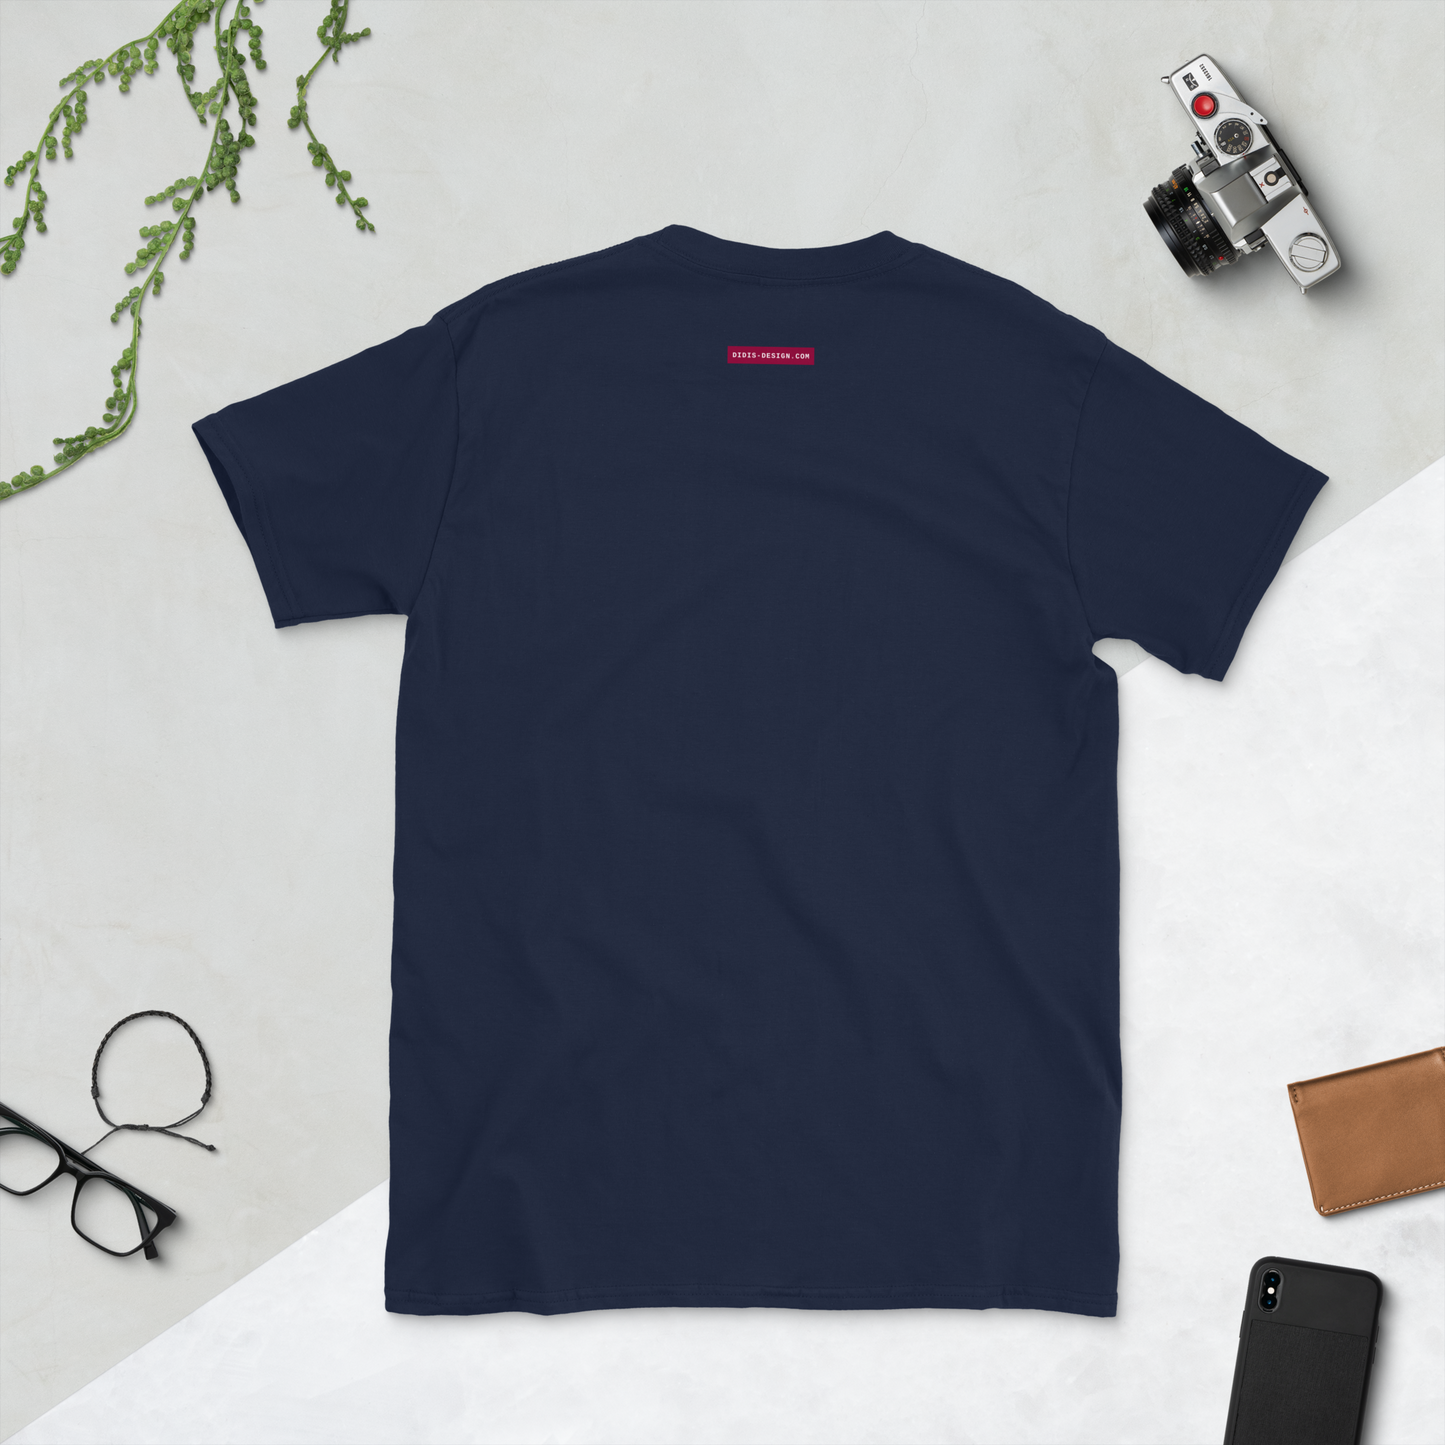 United States Shogun - Short-Sleeve Unisex T-Shirt